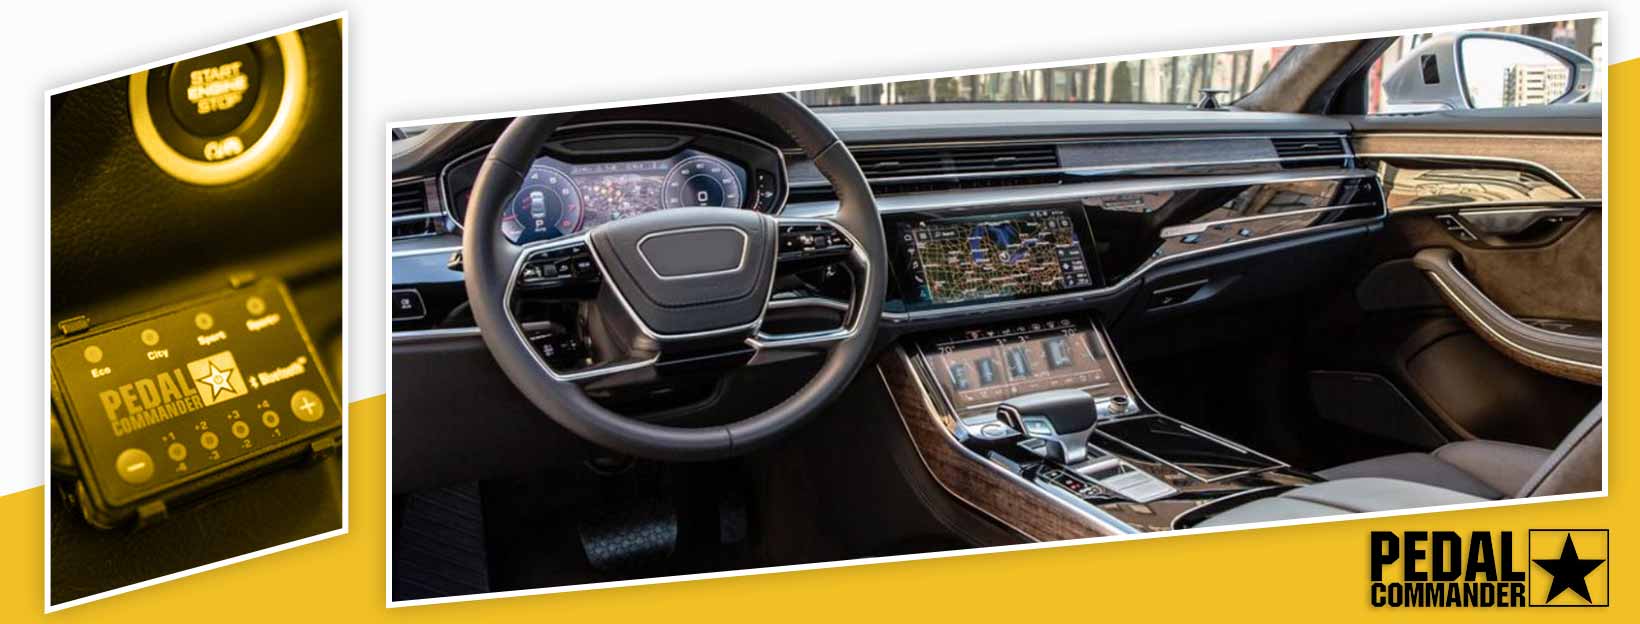 Pedal Commander for Audi A8 - interior